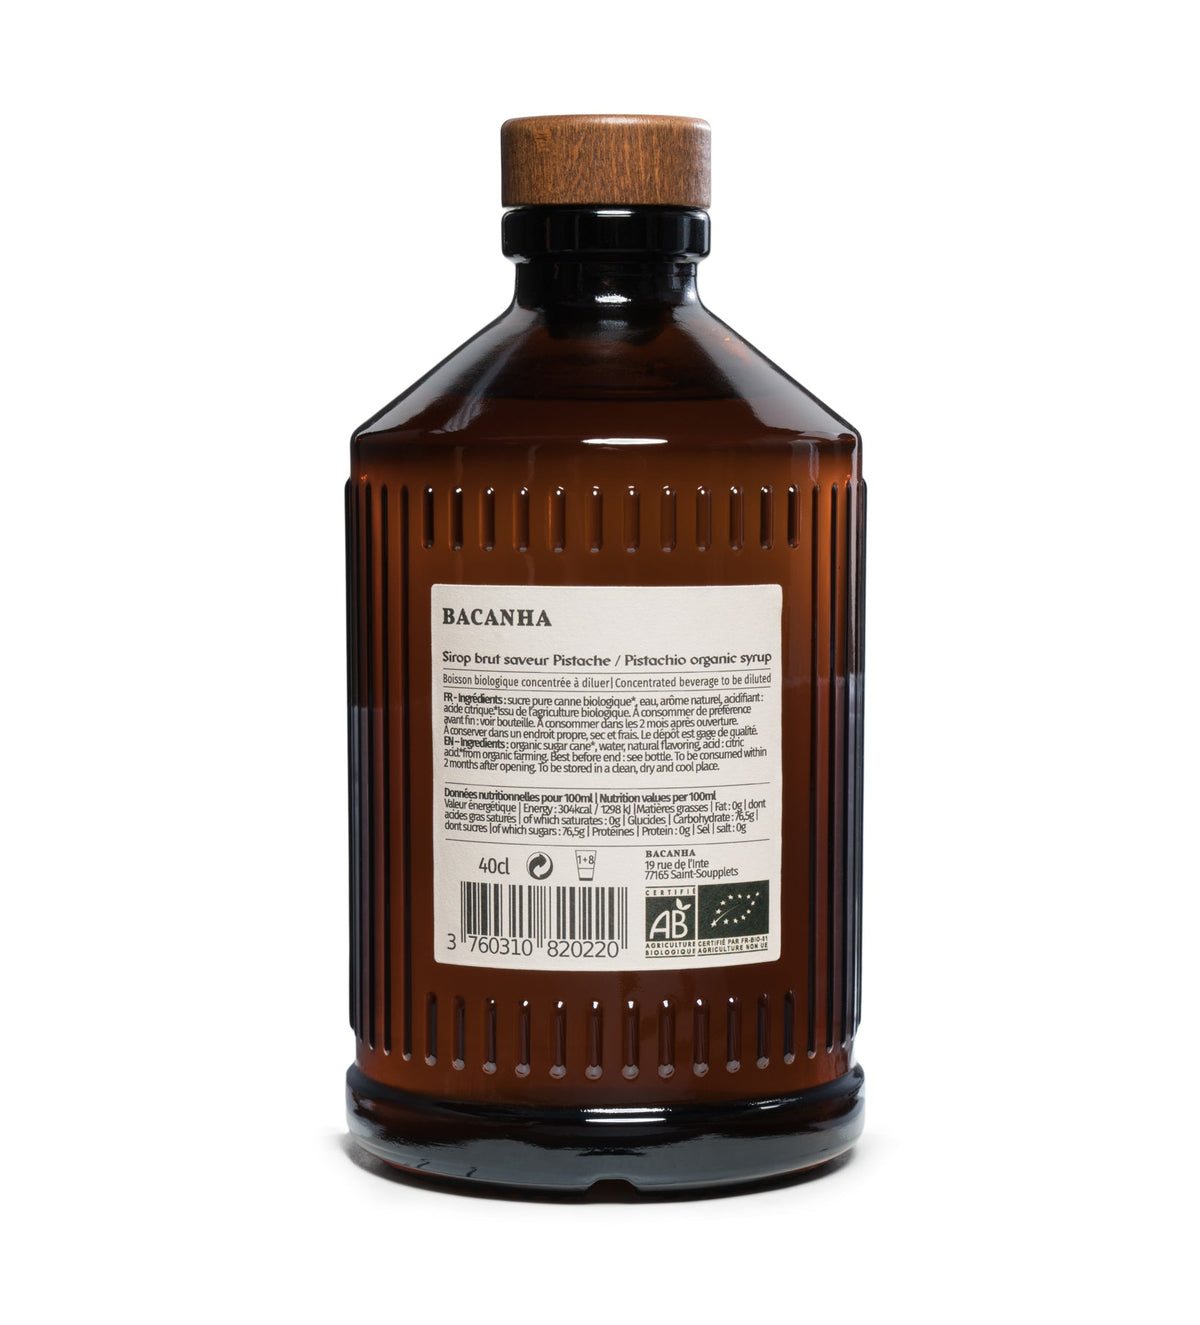 &lt;tc&gt;Bacanha Pistachio flavored syrup [ORGANIC]&lt;/tc&gt;